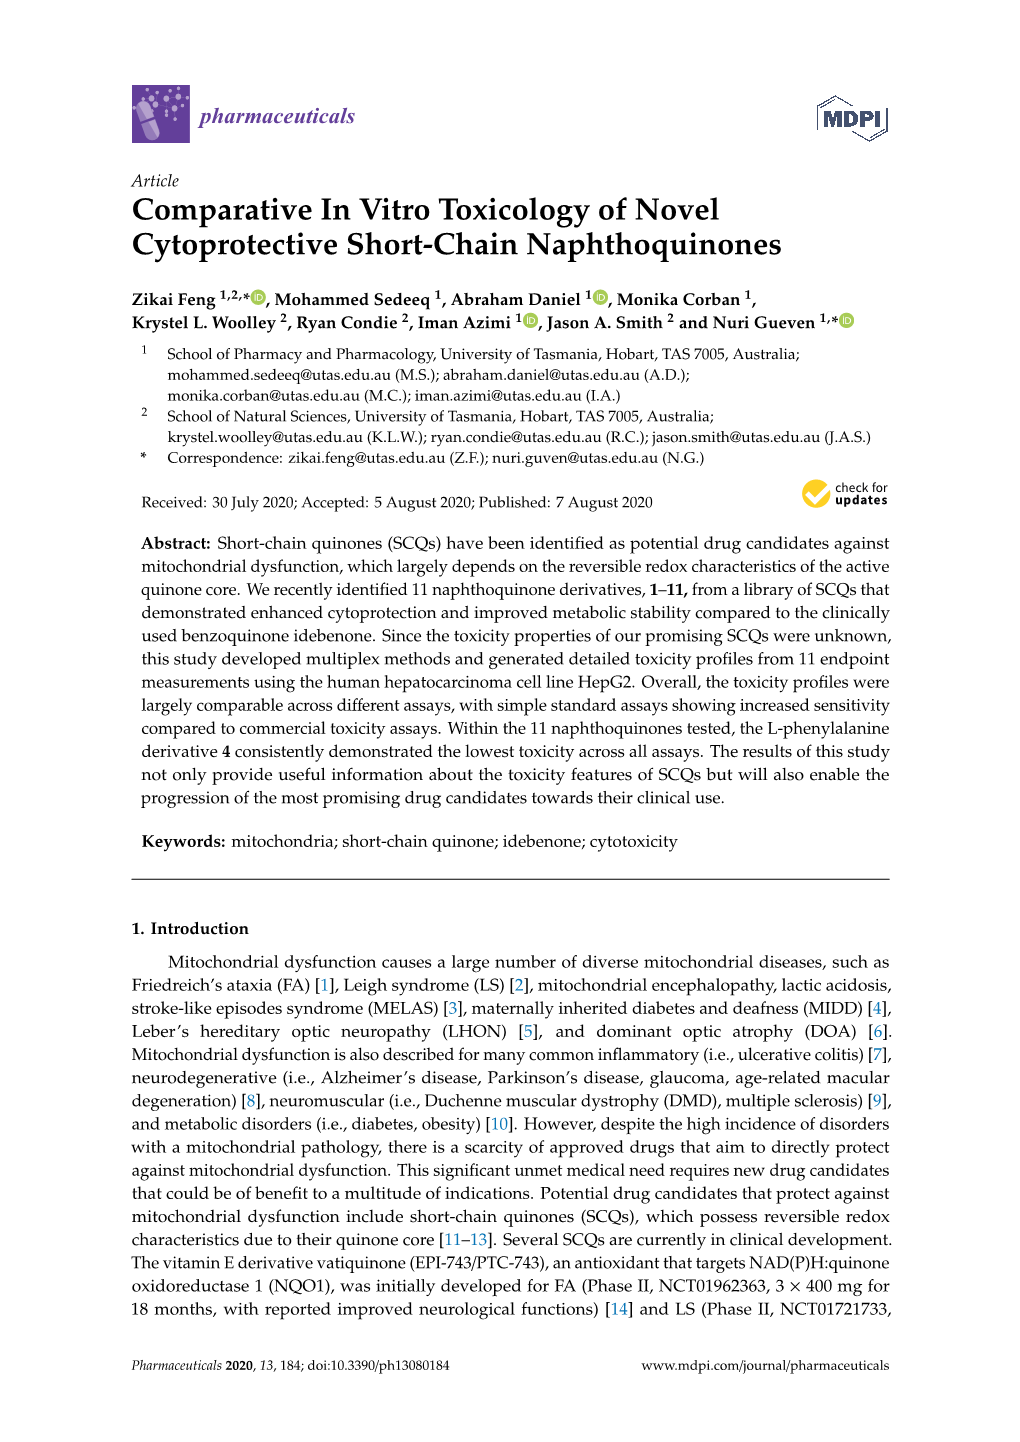 Comparative in Vitro Toxicology of Novel Cytoprotective Short-Chain Naphthoquinones